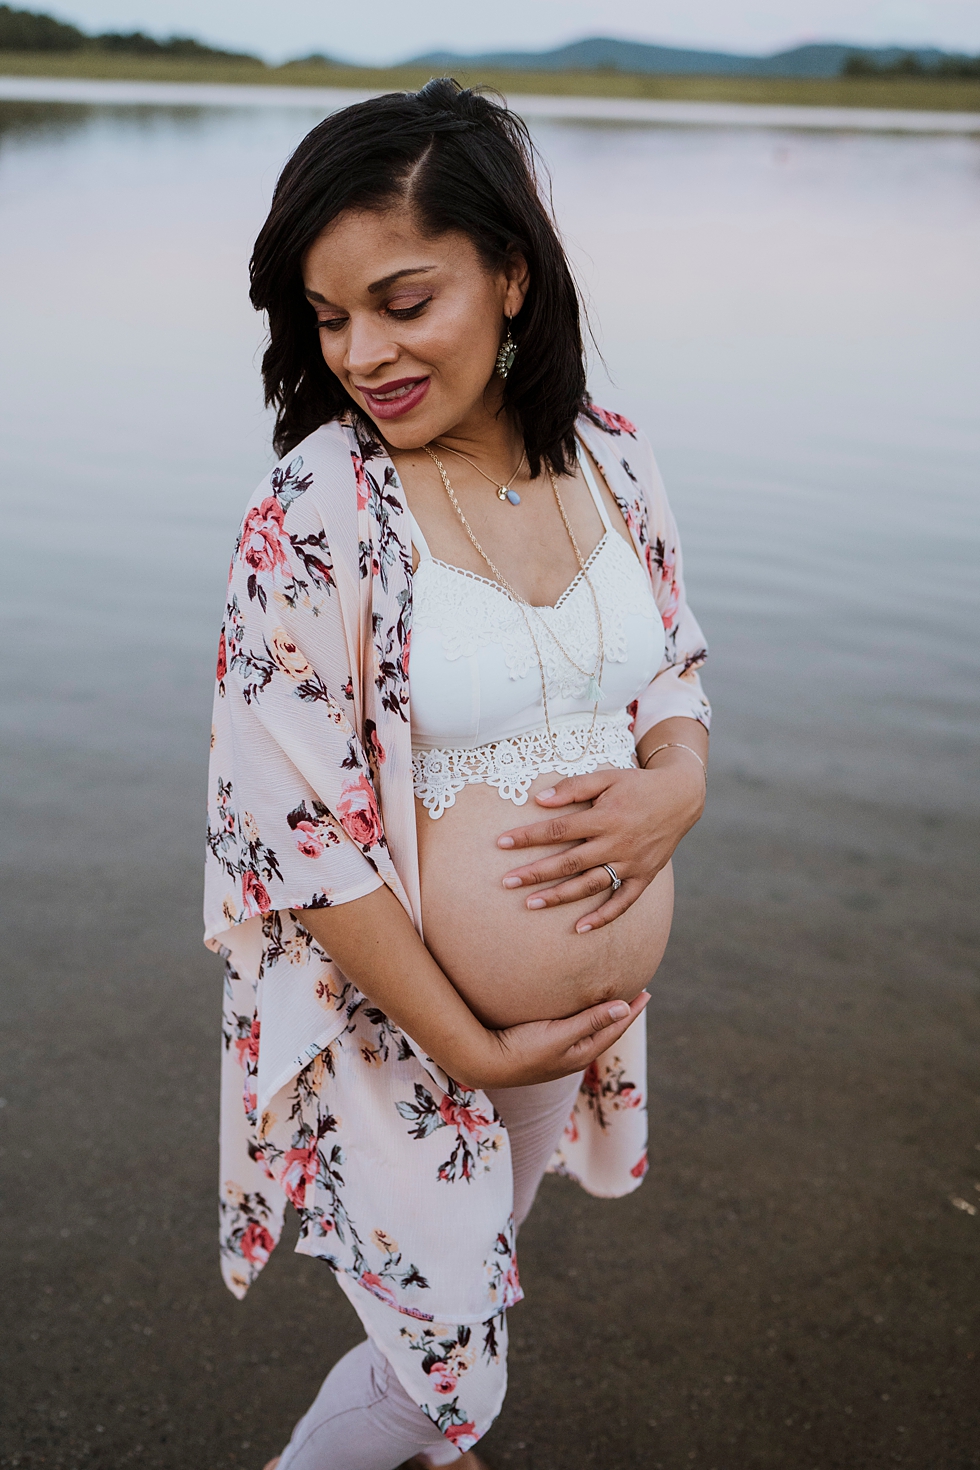  BARE BELLY BABY BUMP MAMMA TO BE PREGNANCY PHOTO MATERNITY PHOTOGRAPHER OHIO PHOTOGRAPHER FLORAL ACCENTS #photographer #maternityphotos #pregnancy #babybump #maternityphotoshoot #cincinnatiphotographer #louisvillephotographer 